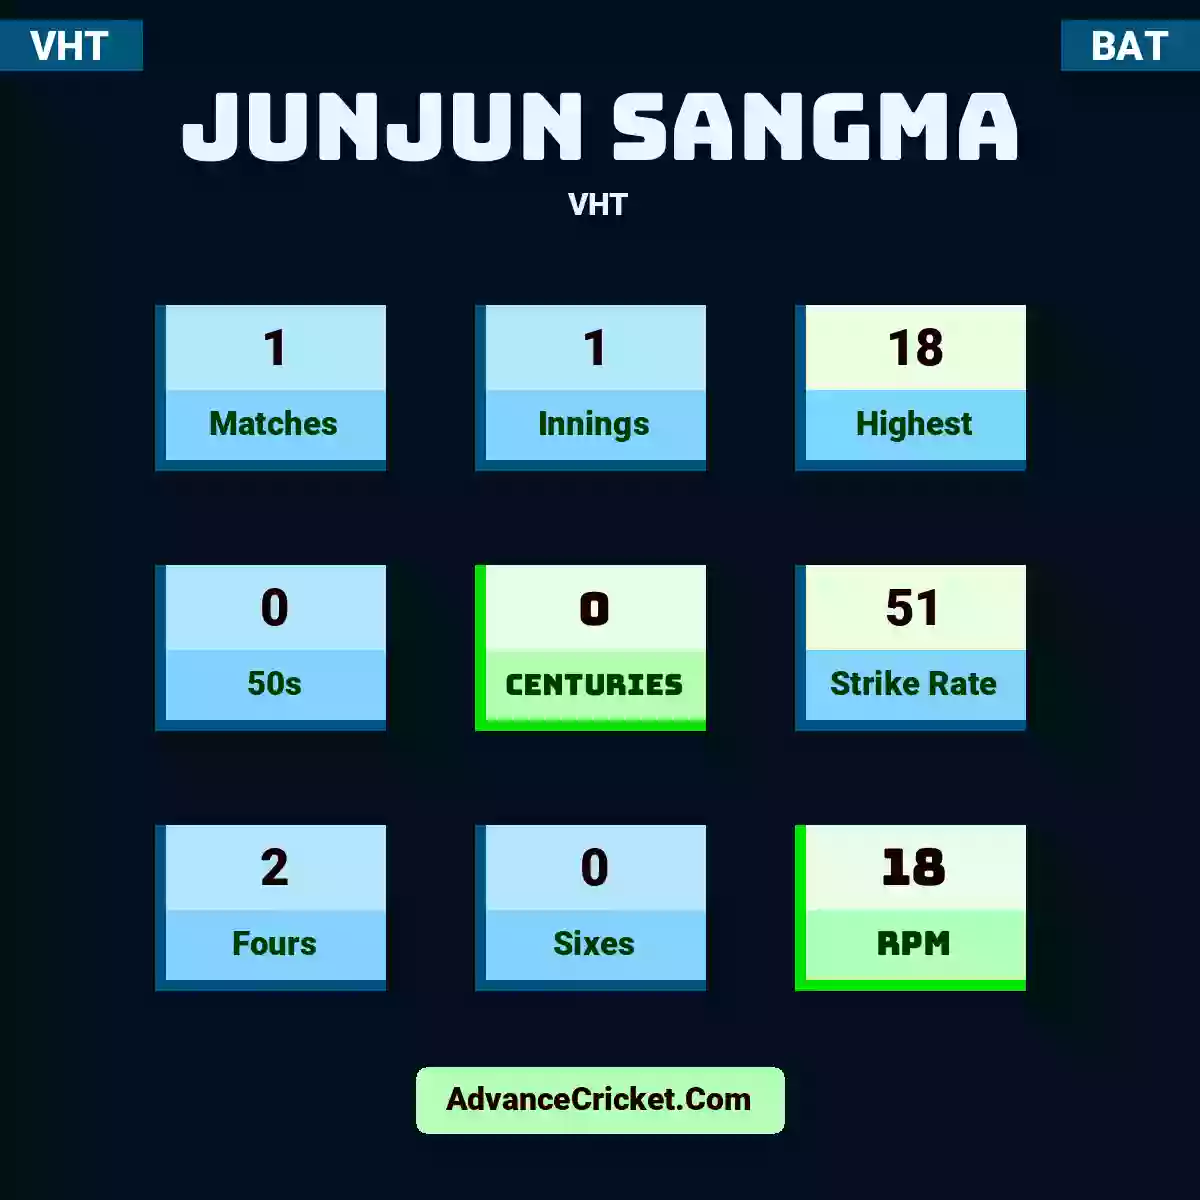 Junjun Sangma VHT , Junjun Sangma played 1 matches, scored 18 runs as highest, 0 half-centuries, and 0 centuries, with a strike rate of 51. J.Sangma hit 2 fours and 0 sixes, with an RPM of 18.